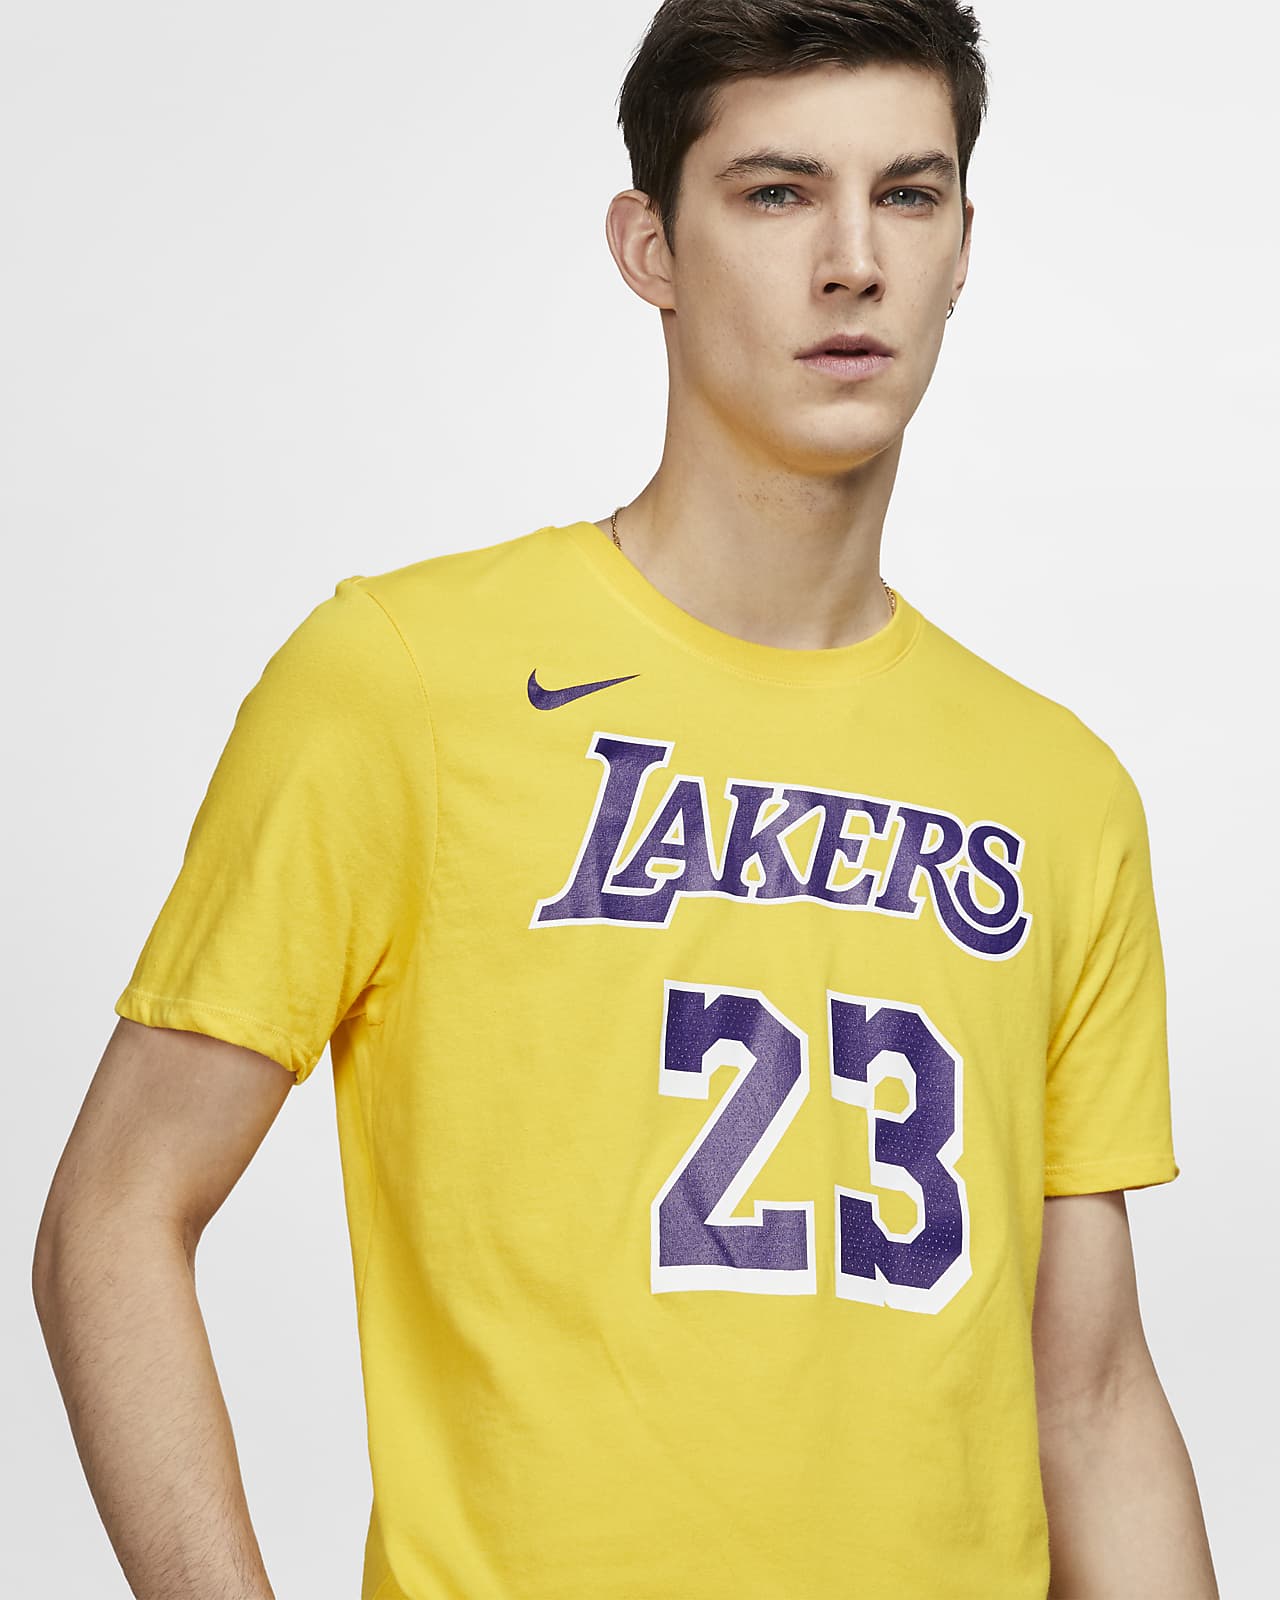 digerir polvo Tren Camiseta Nike Lakers Lebron James Hotsell - deportesinc.com 1688234473